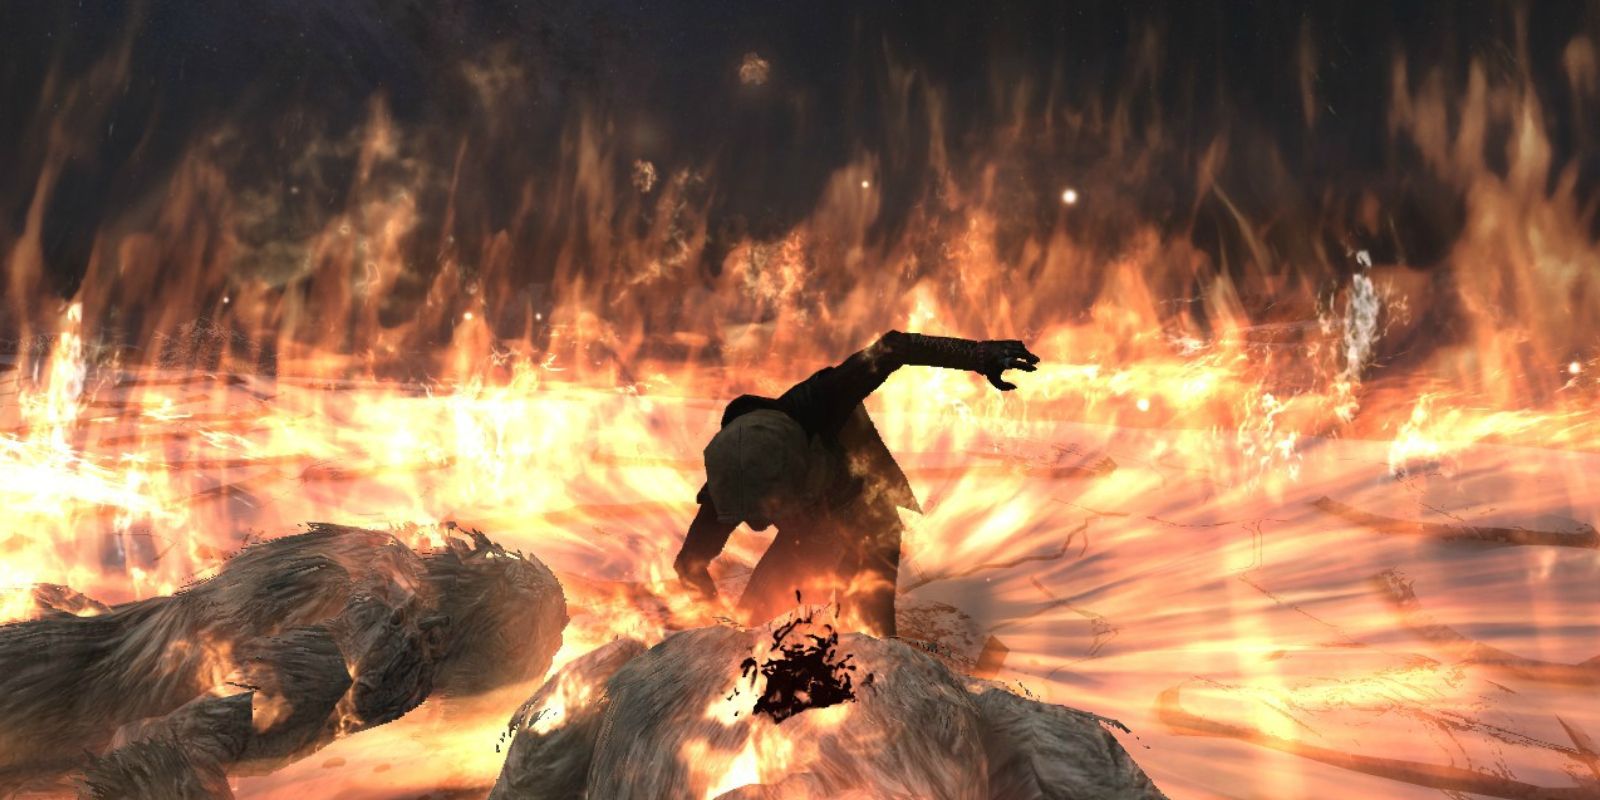 Skyrim s Best Magic Spells Explained Fire Storm Destruction Skill